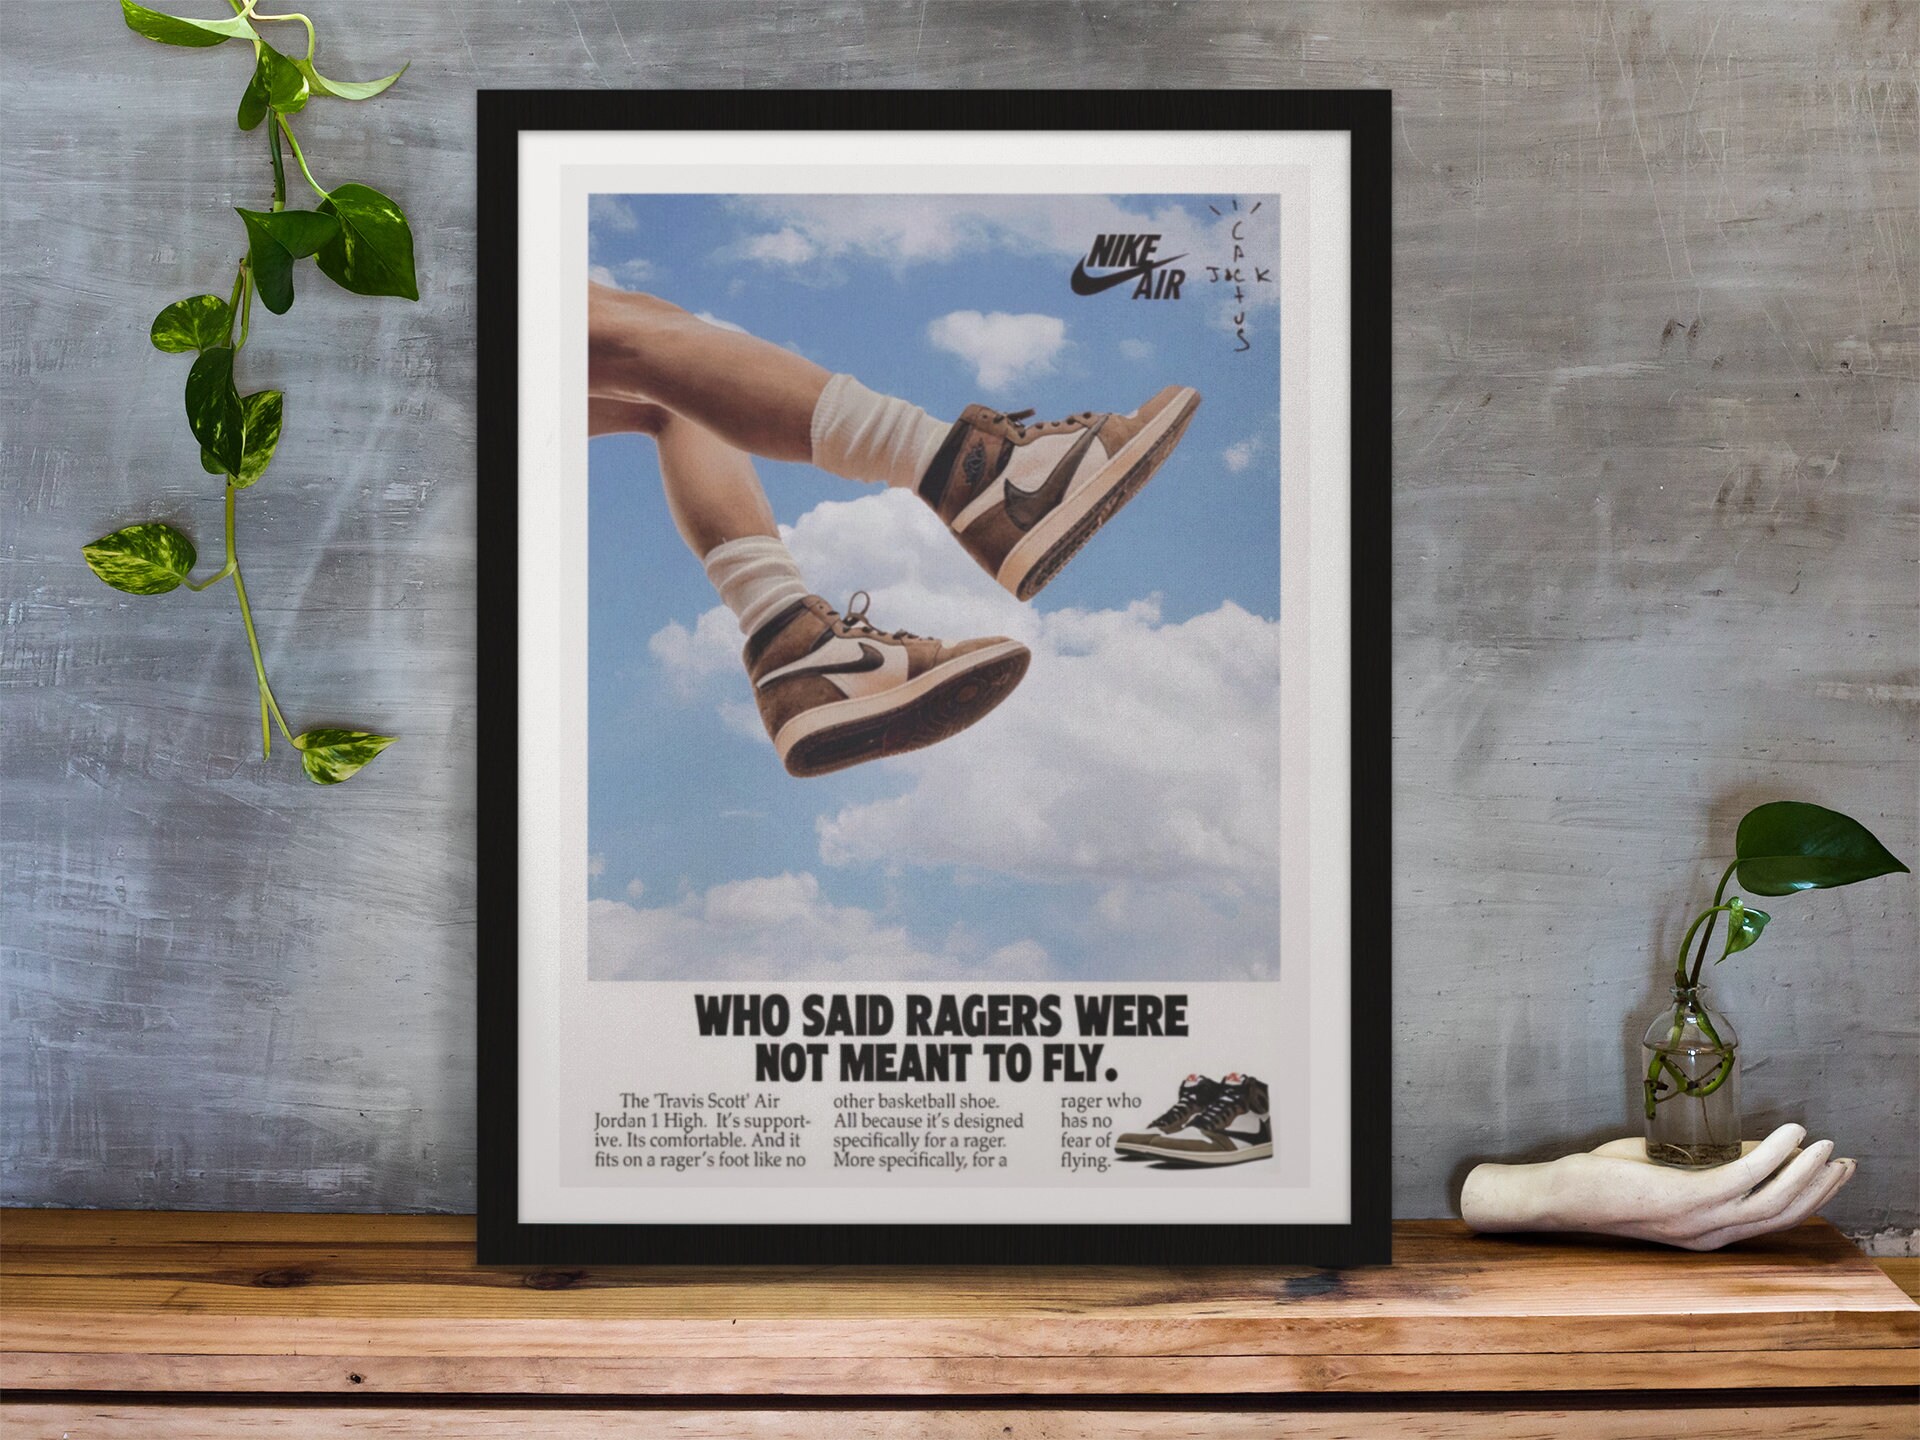 Look Mom, I Can Fly! - Travis Scott x Air Jordan 1 Poster